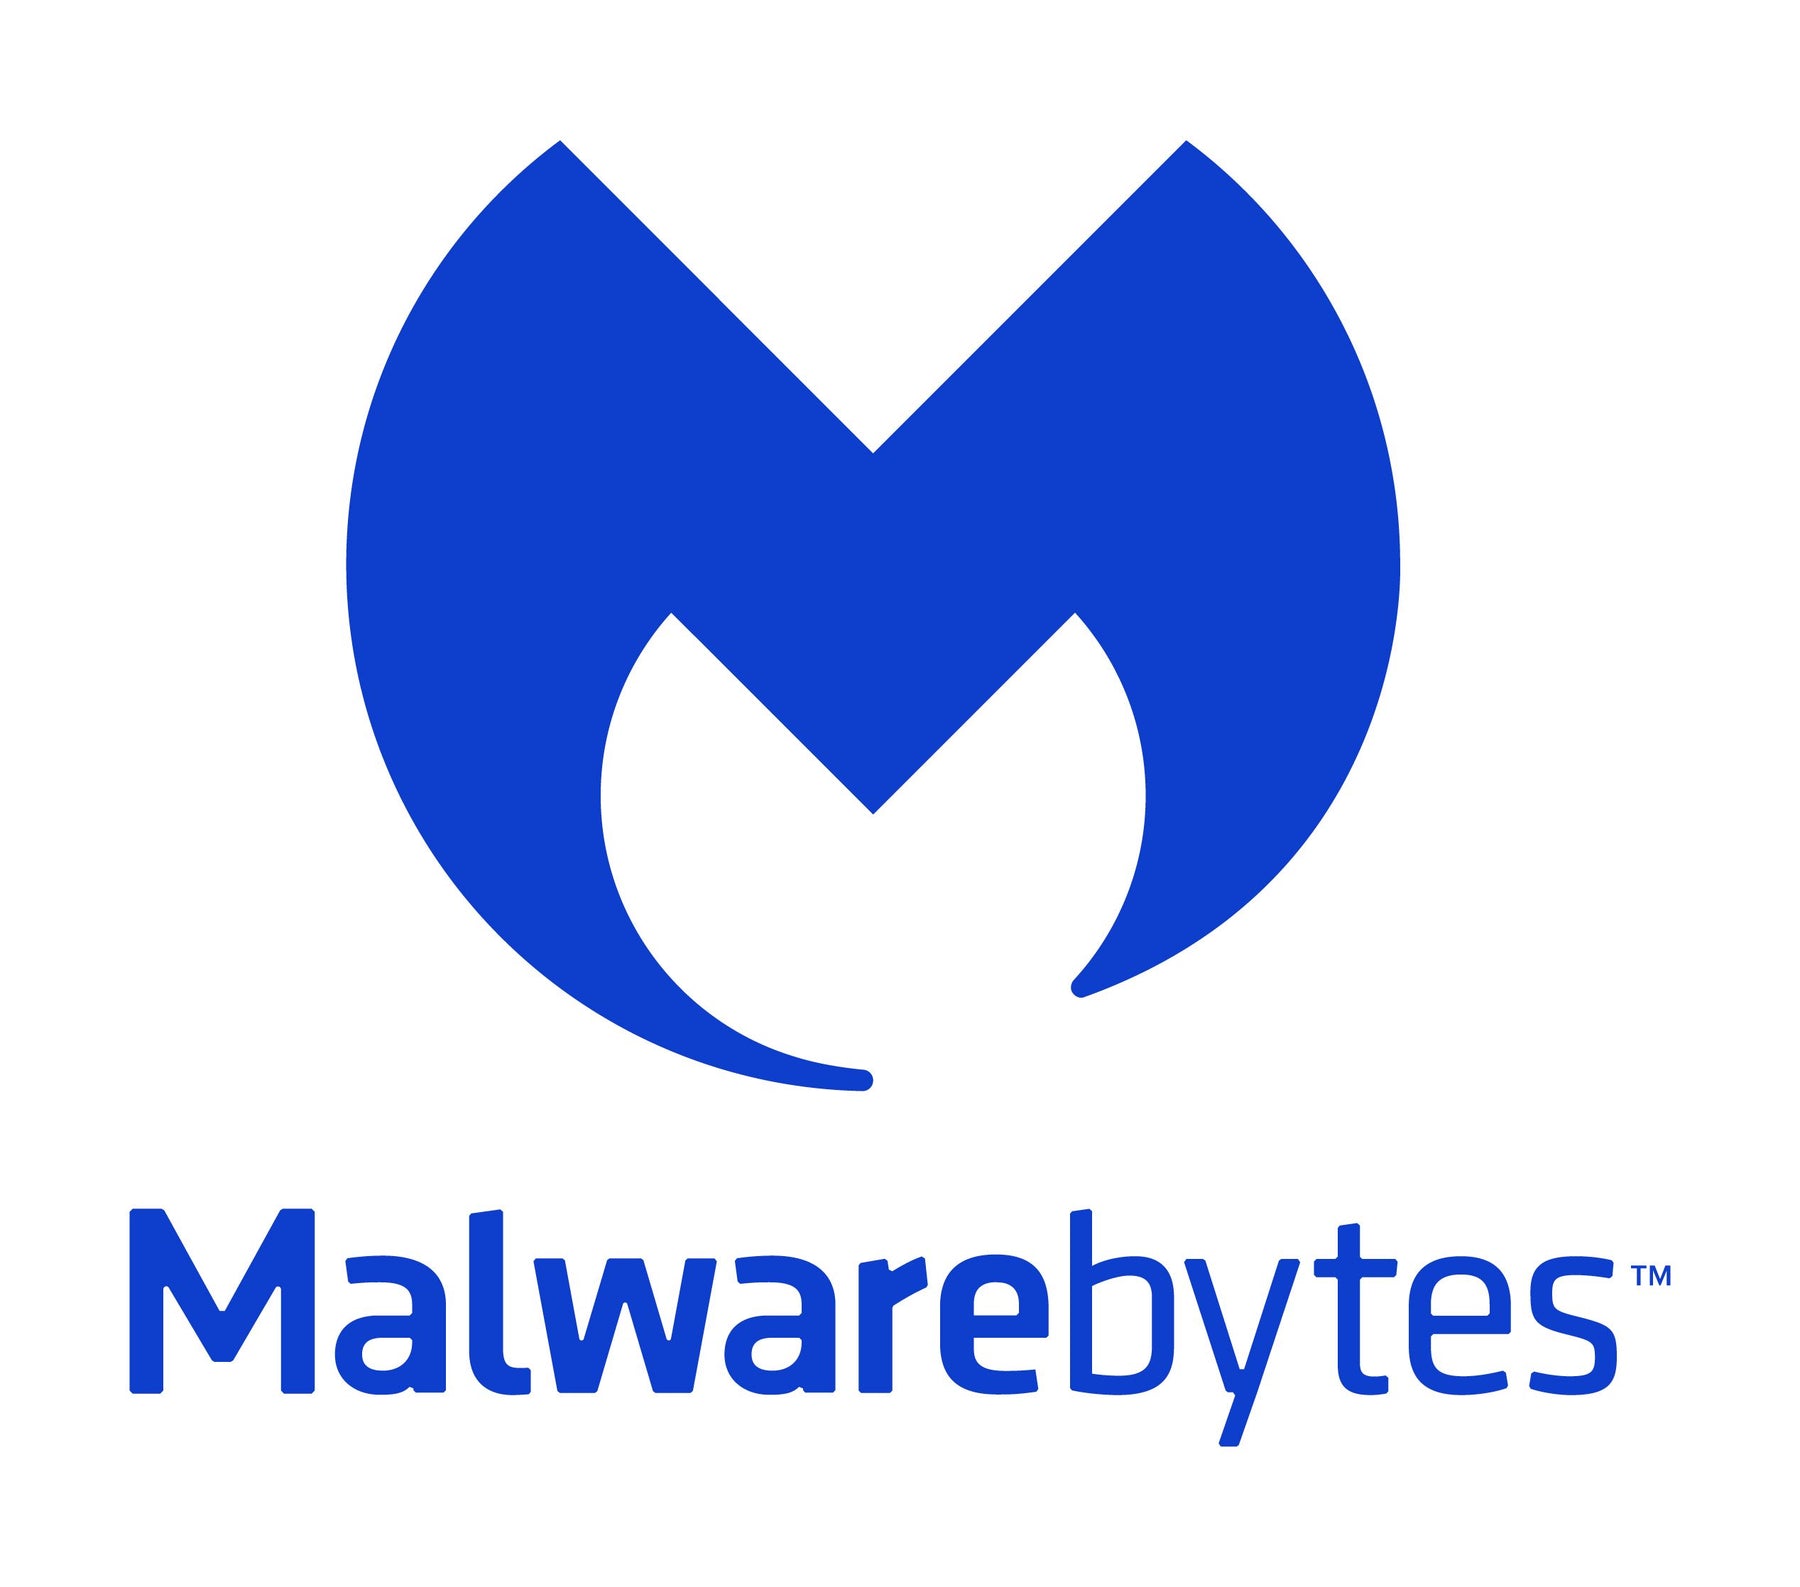 malware bytes official reseller auastralia